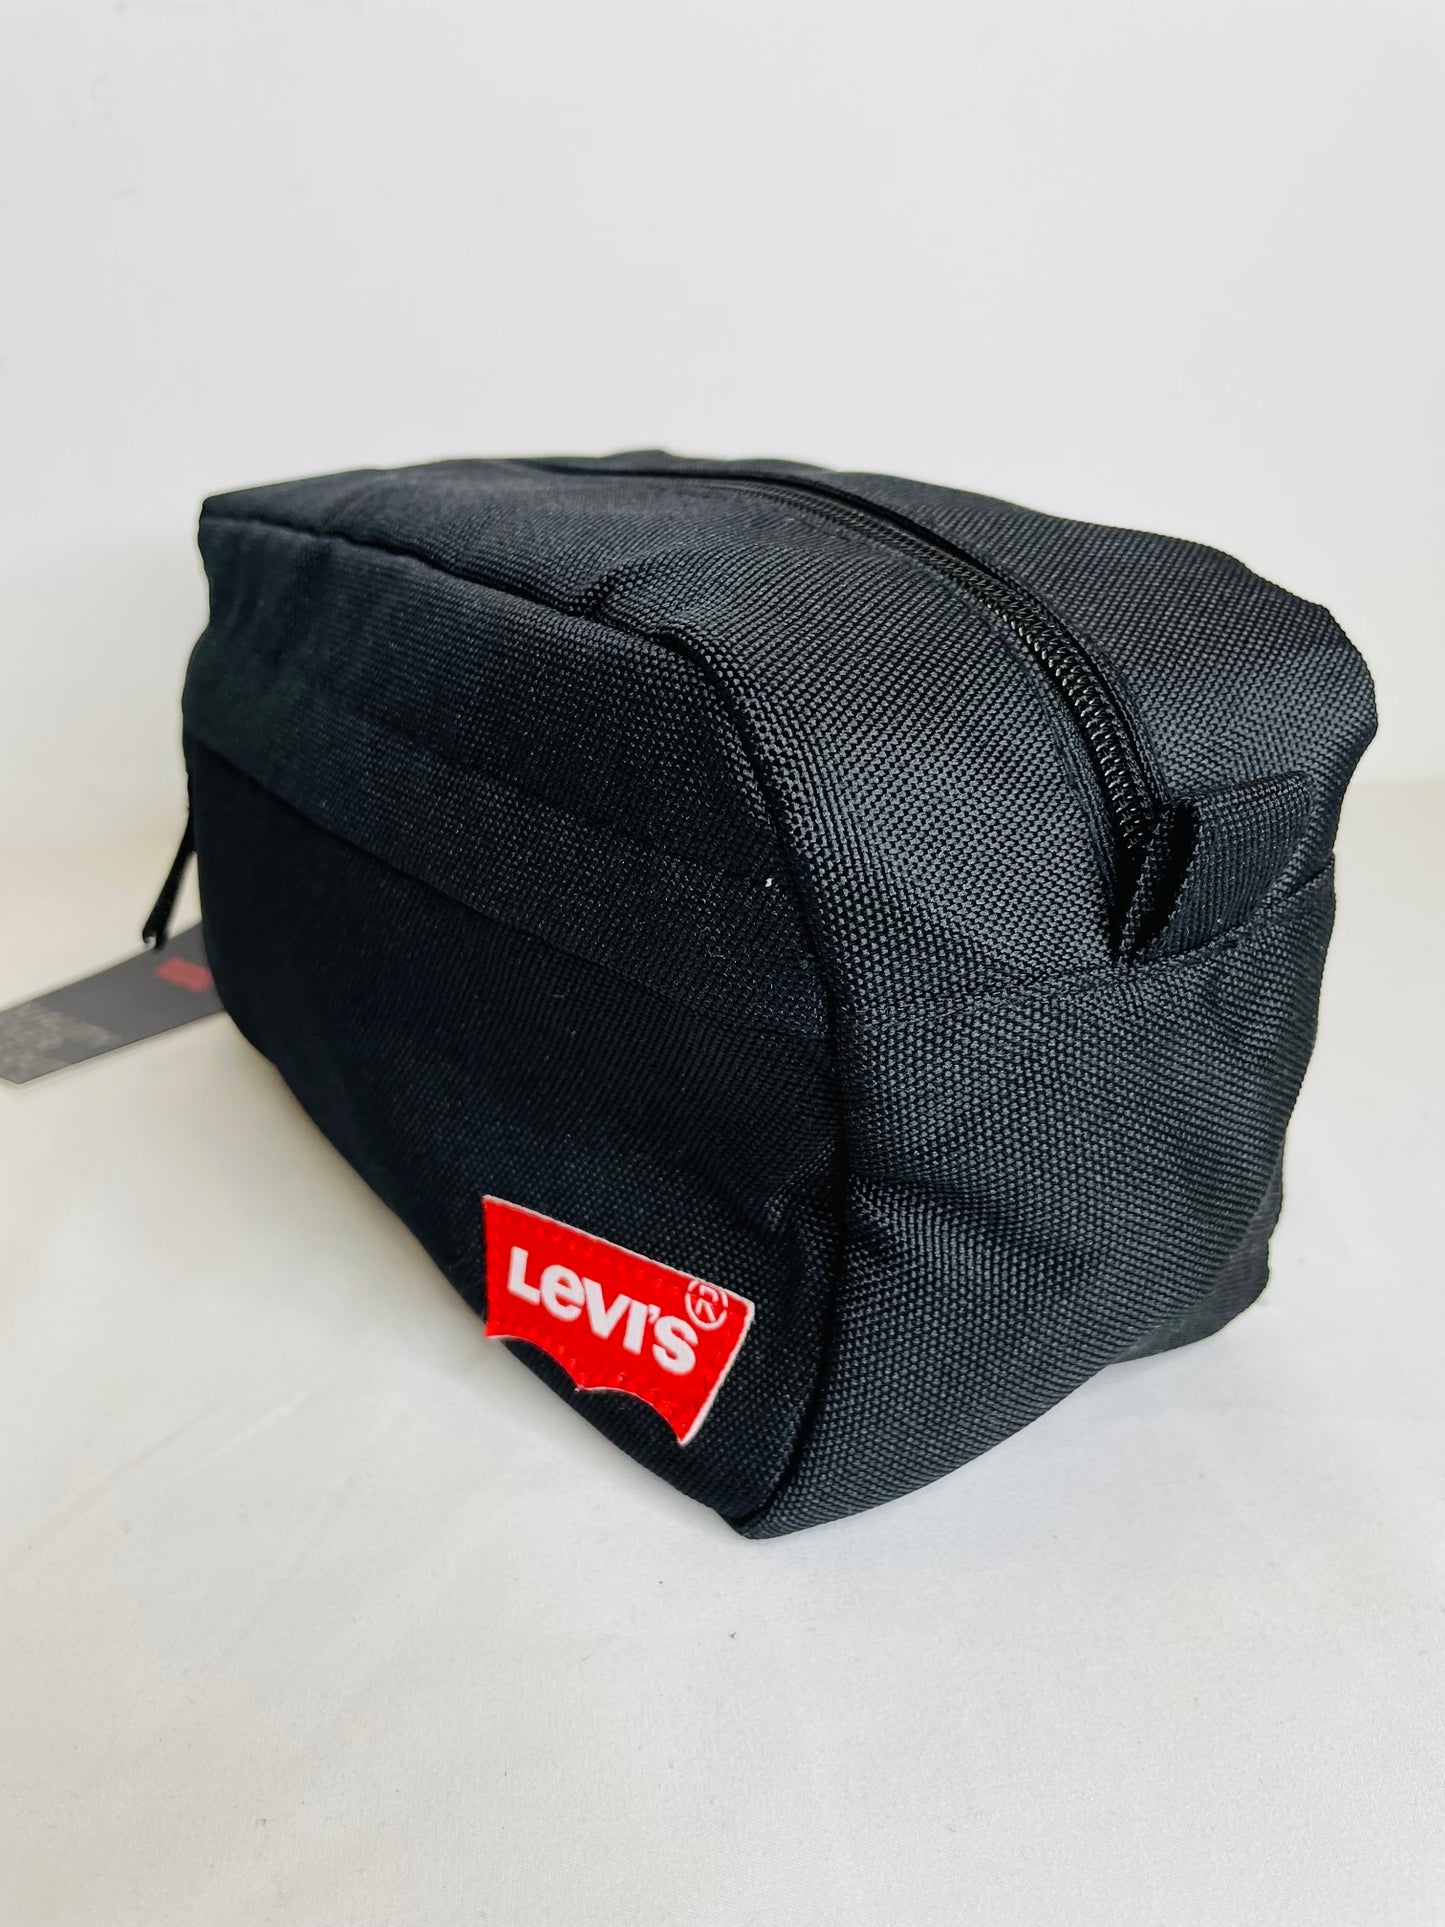 Levi’s hand bag